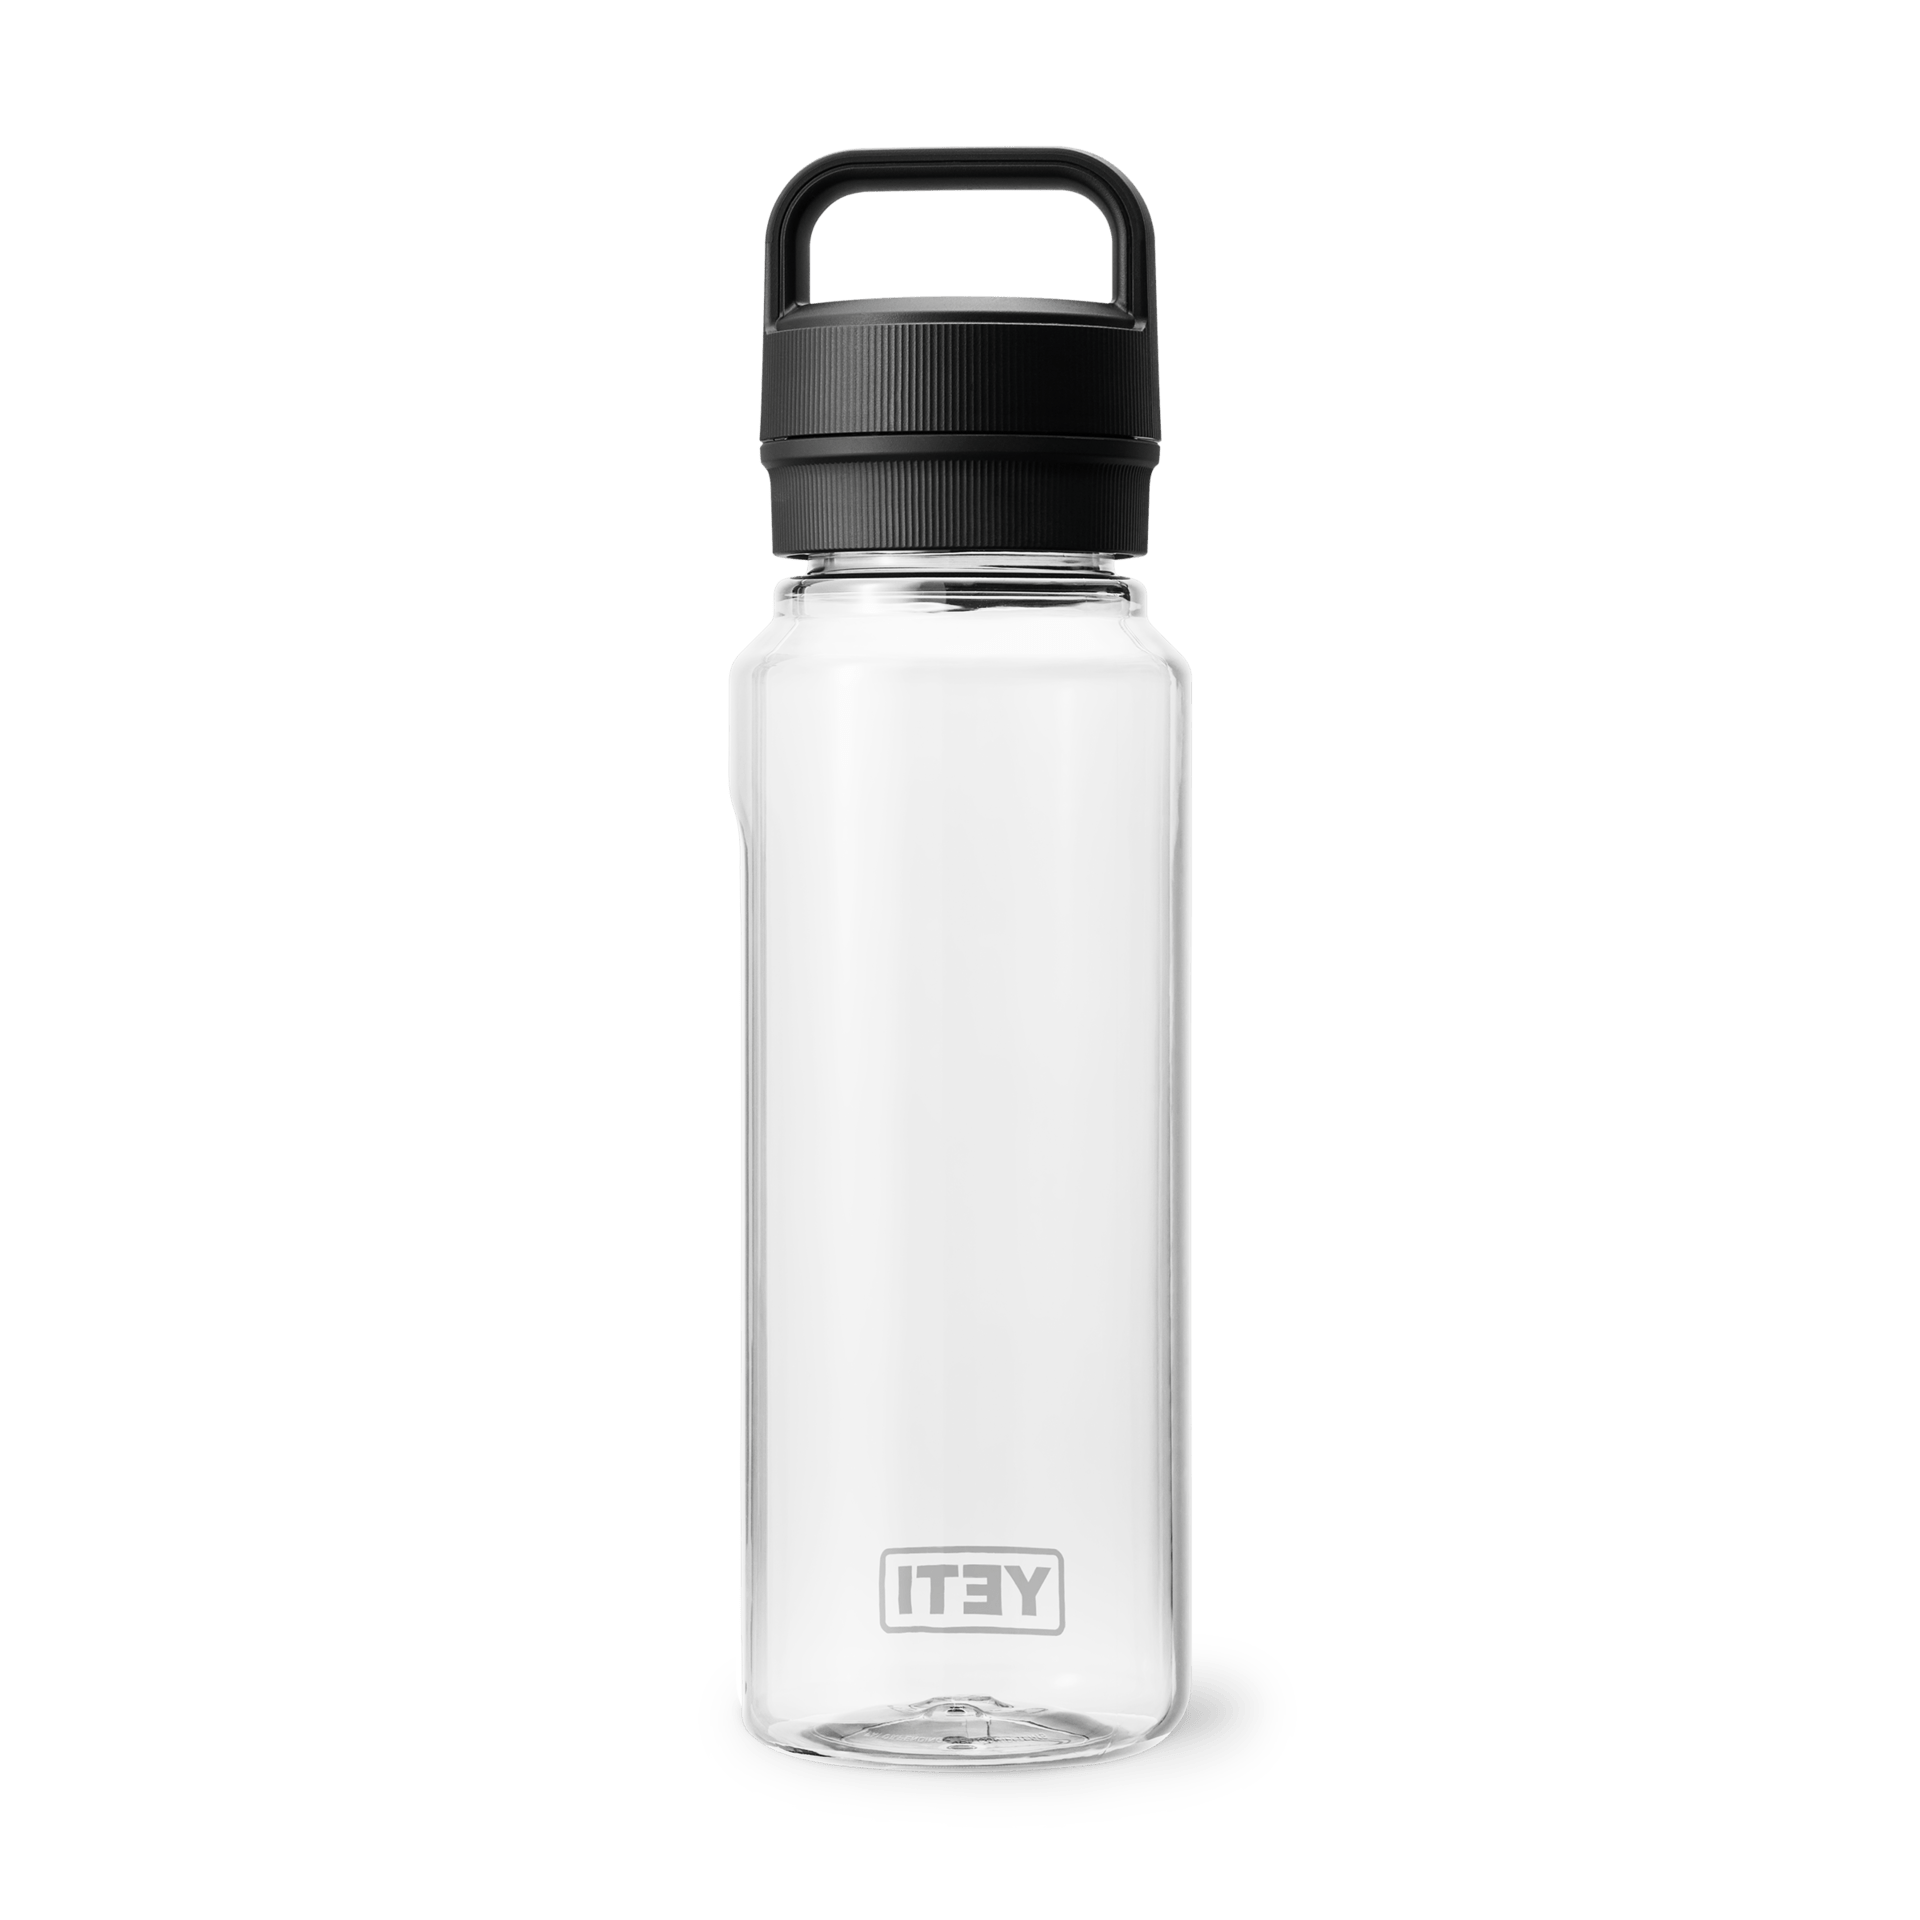 Yeti Chug Water Bottle | Newell Wing